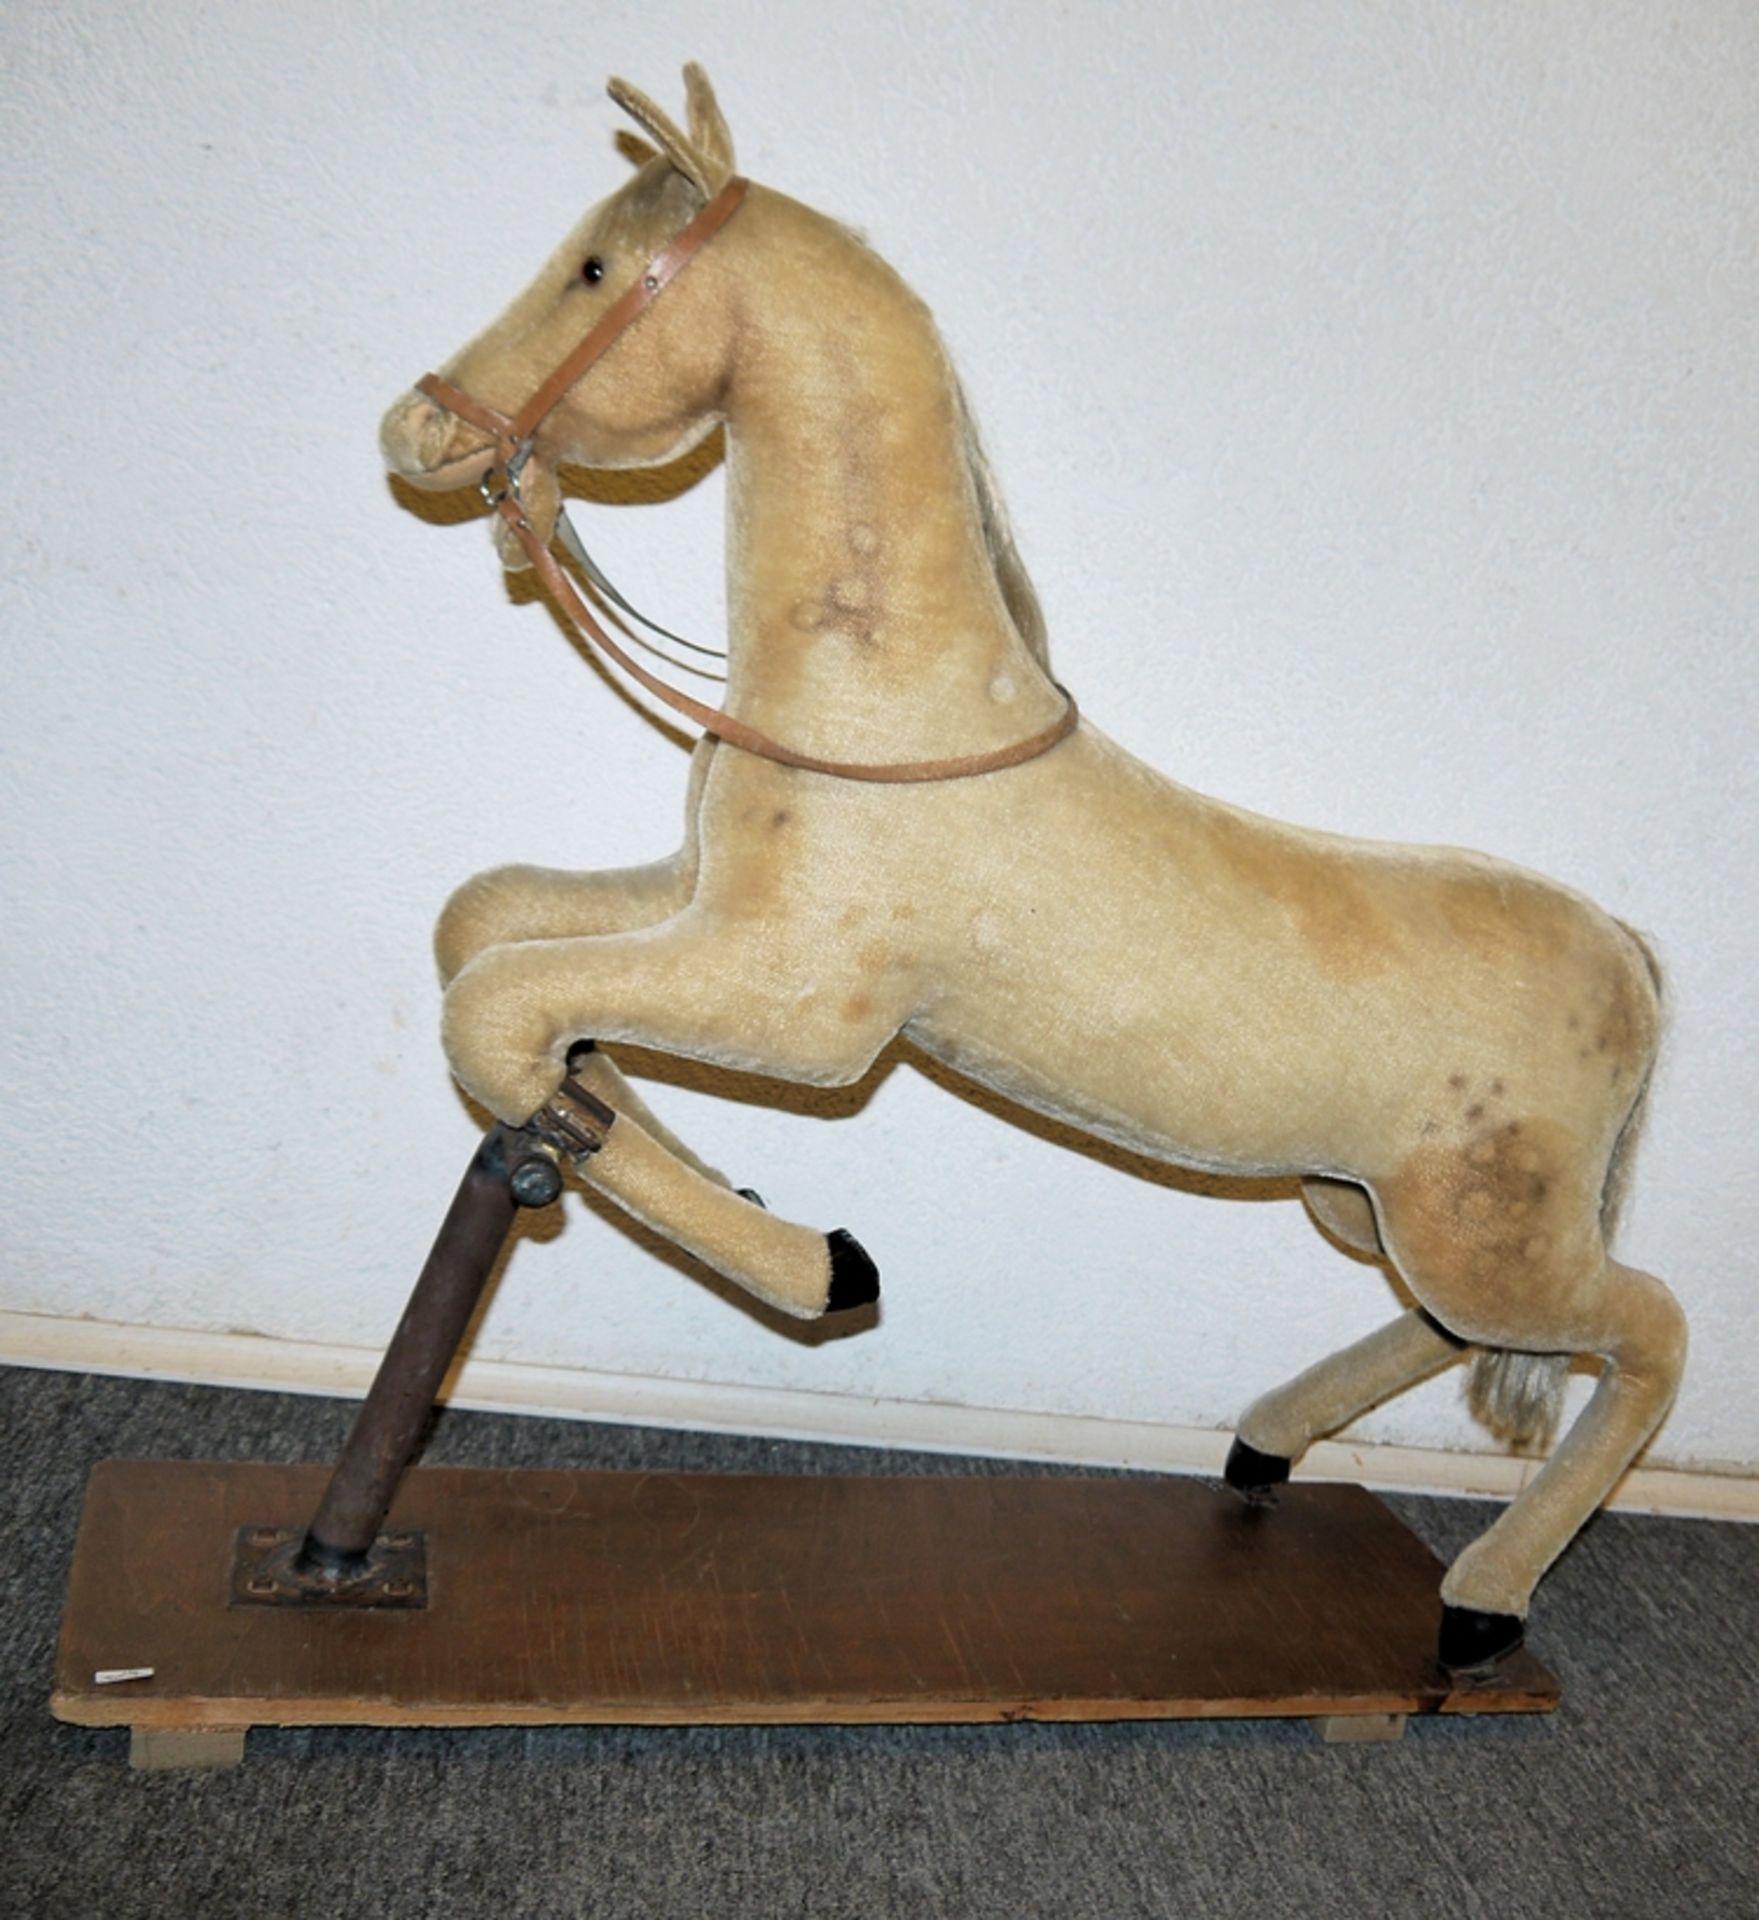 Rarität für Steiff Sammler*innen: Großes Studio Pony um 1950/60